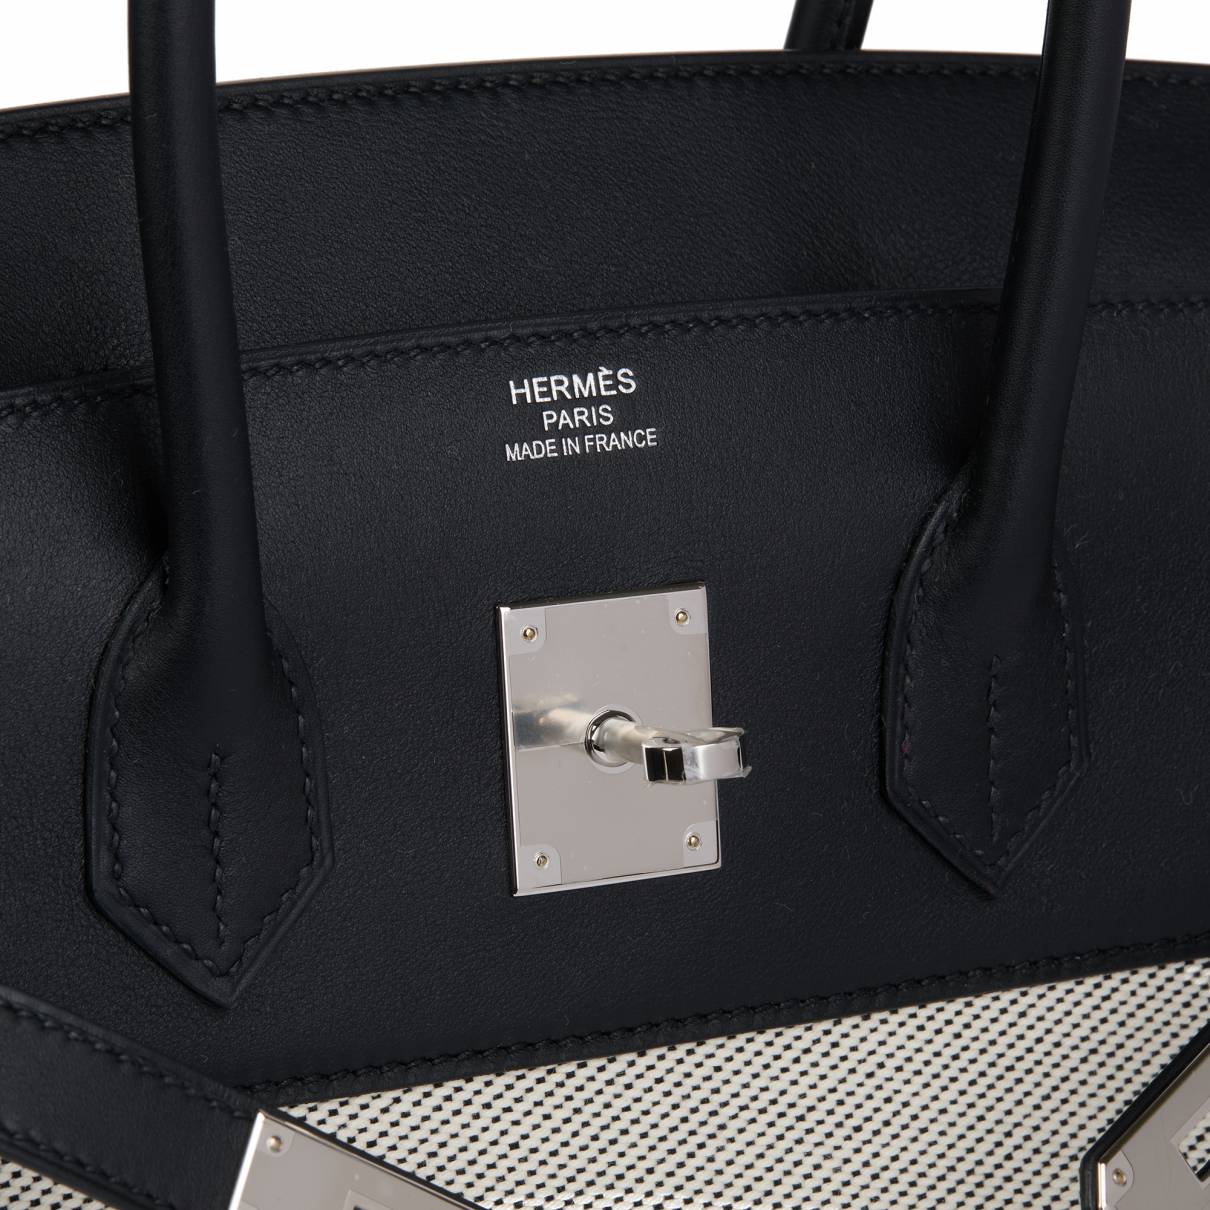 Hermès - Authenticated Birkin 35 Handbag - Leather Black Plain for Women, Never Worn